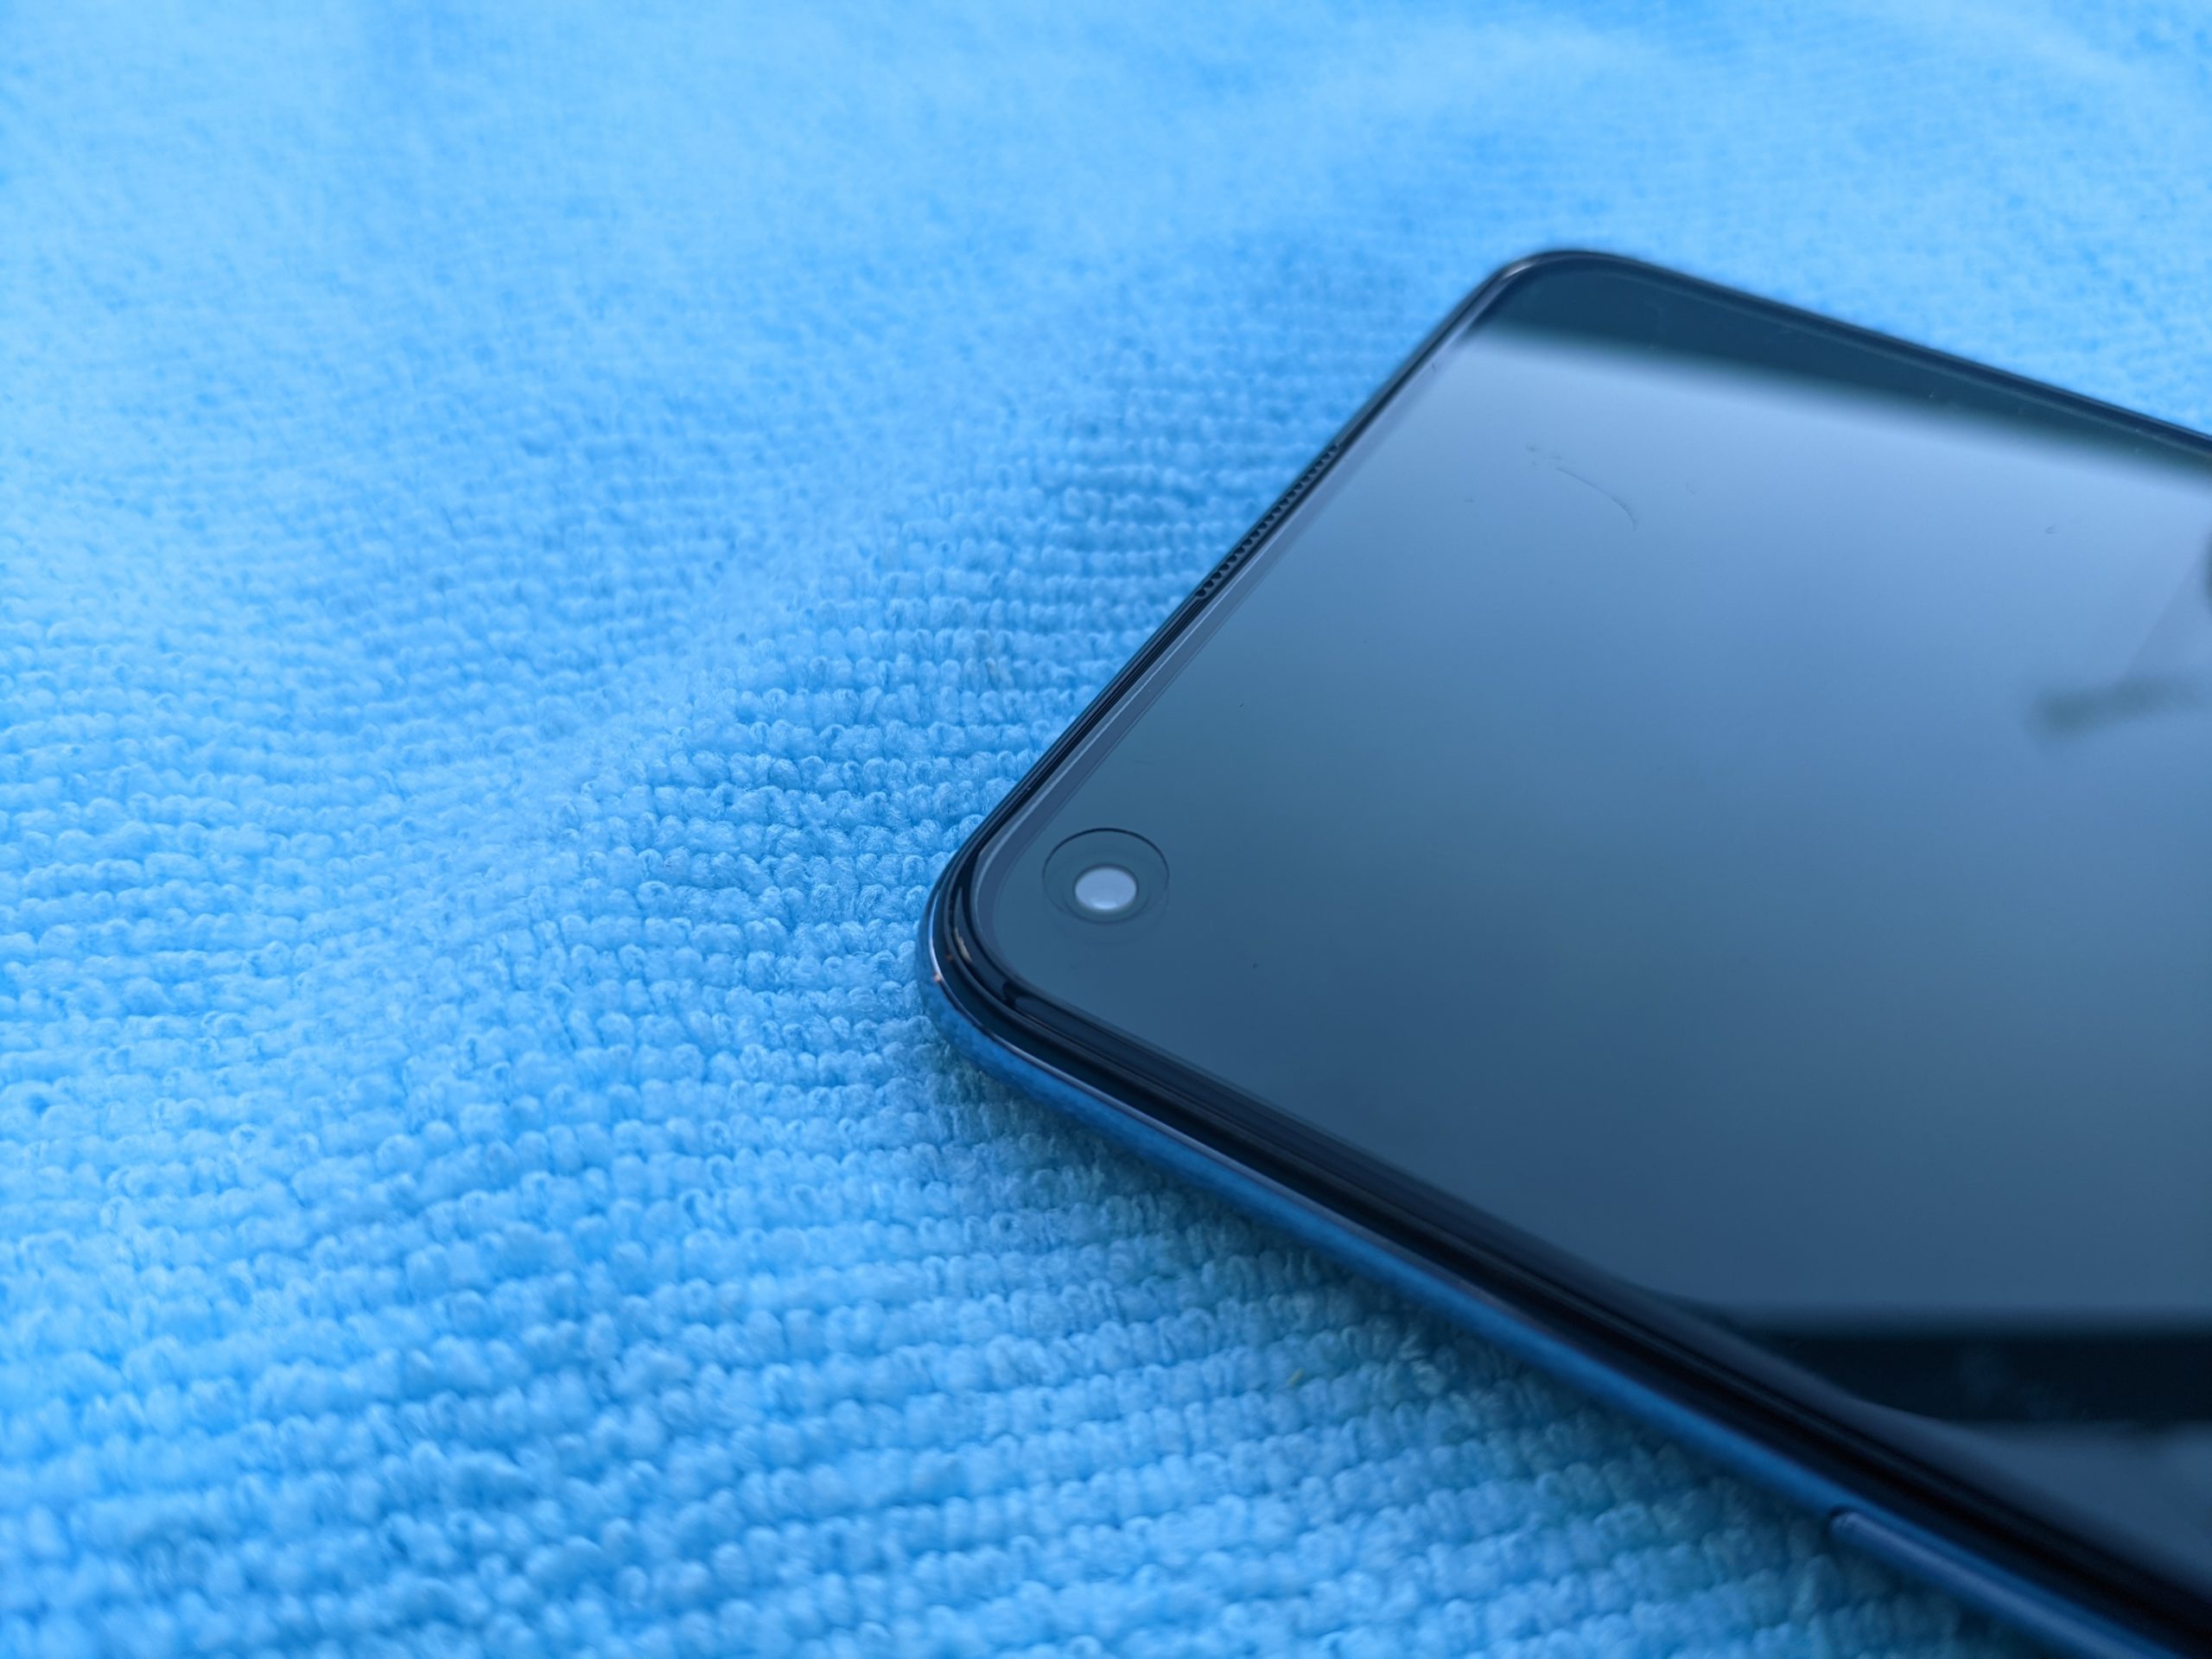 Does OnePlus Nord 2 5G support face unlock or fingerprint unlock?